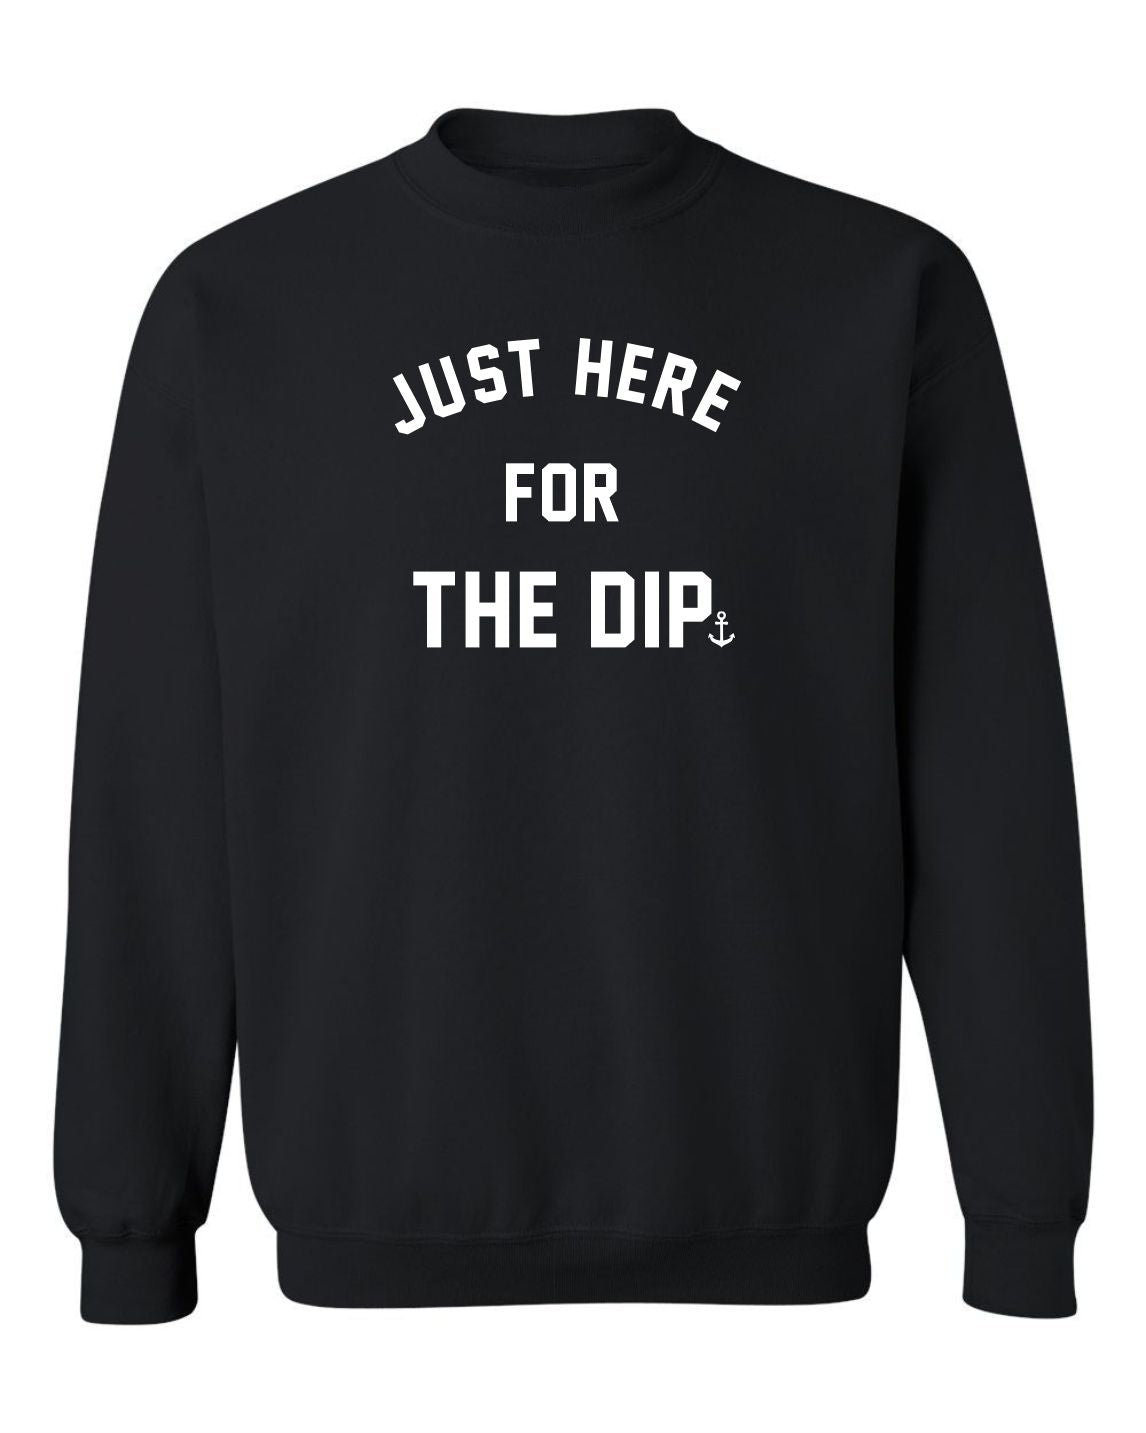 "Just Here For The Dip" Unisex Crewneck Sweatshirt